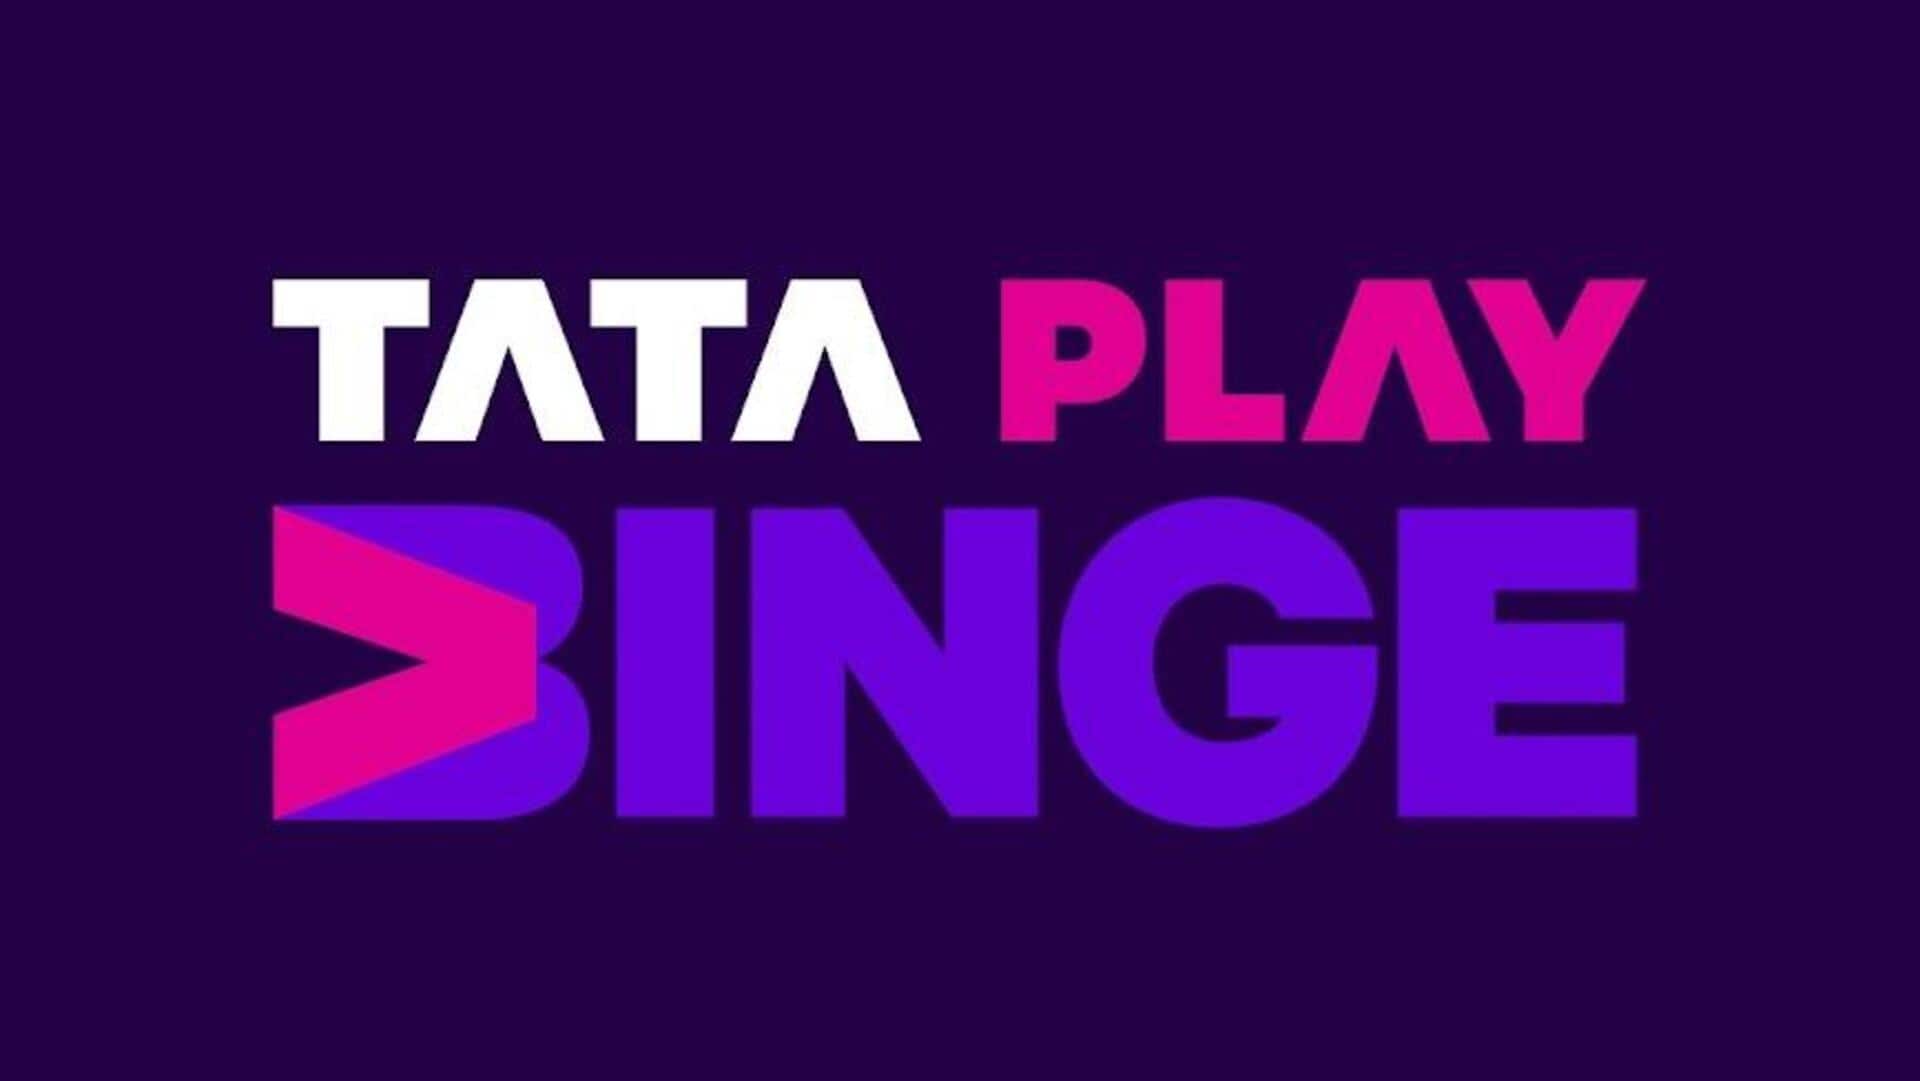 Tata Play Binge goes global as OTT aggregator platform